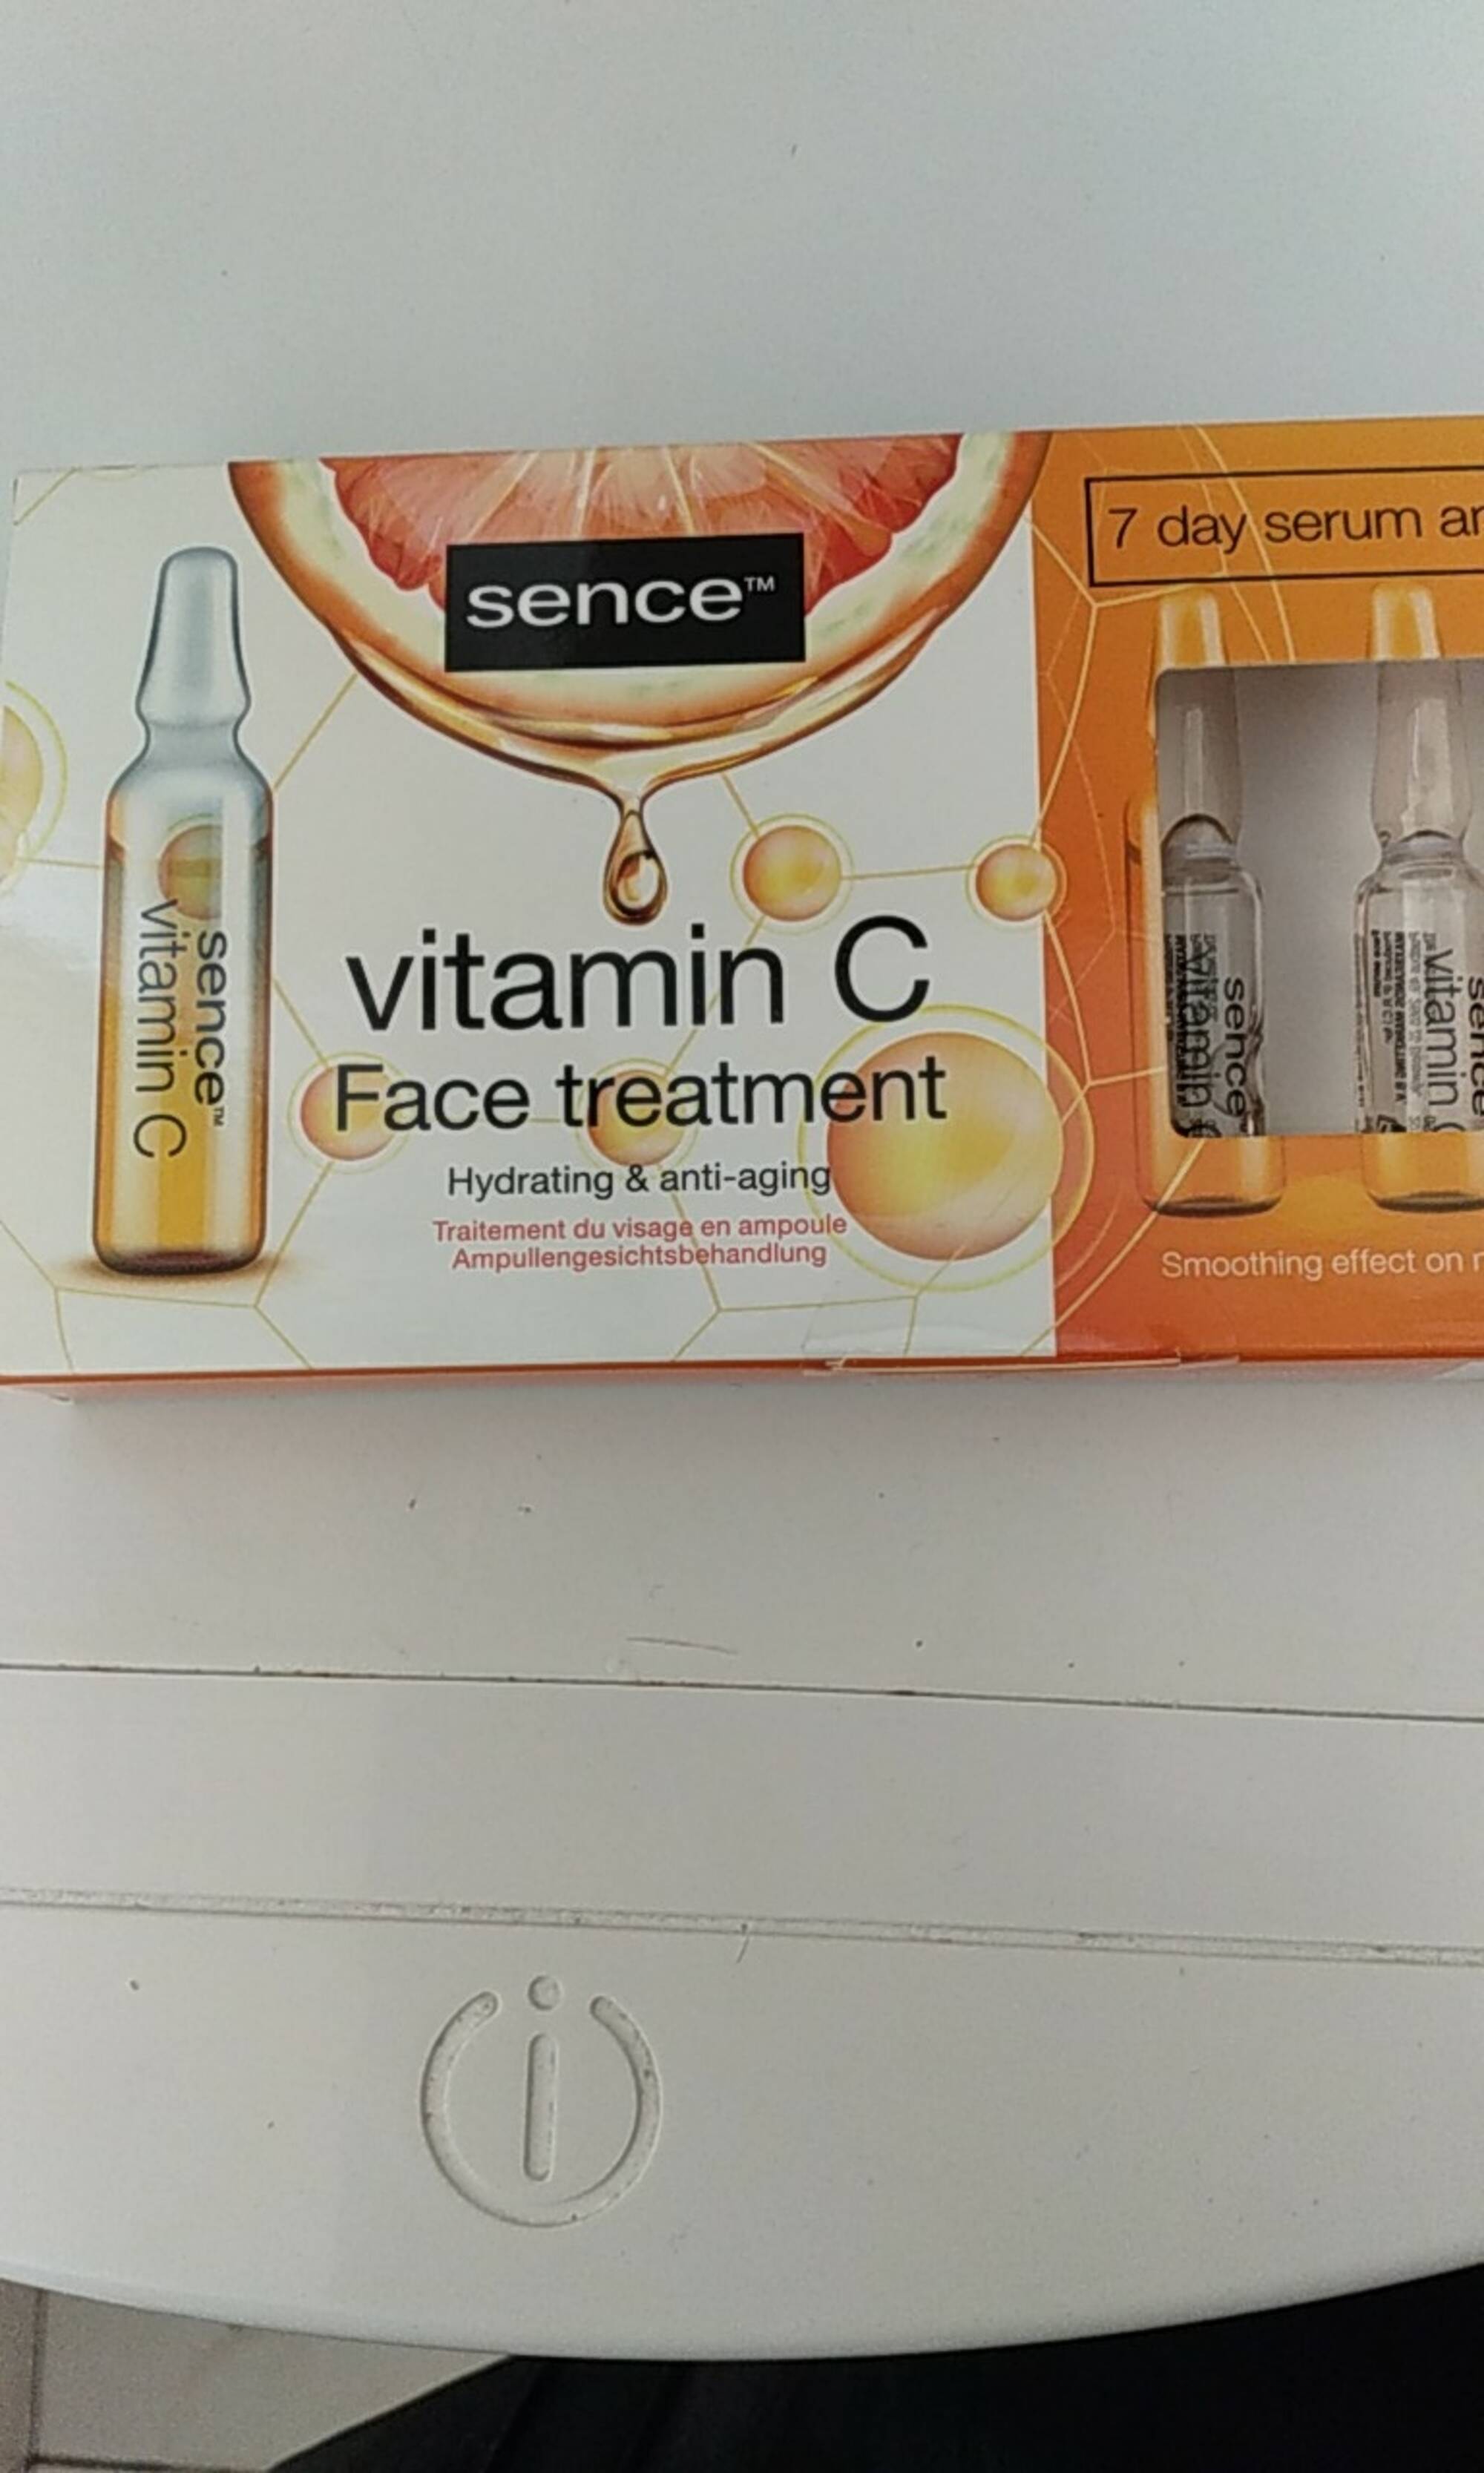 SENCE - Face treatment vitamin C